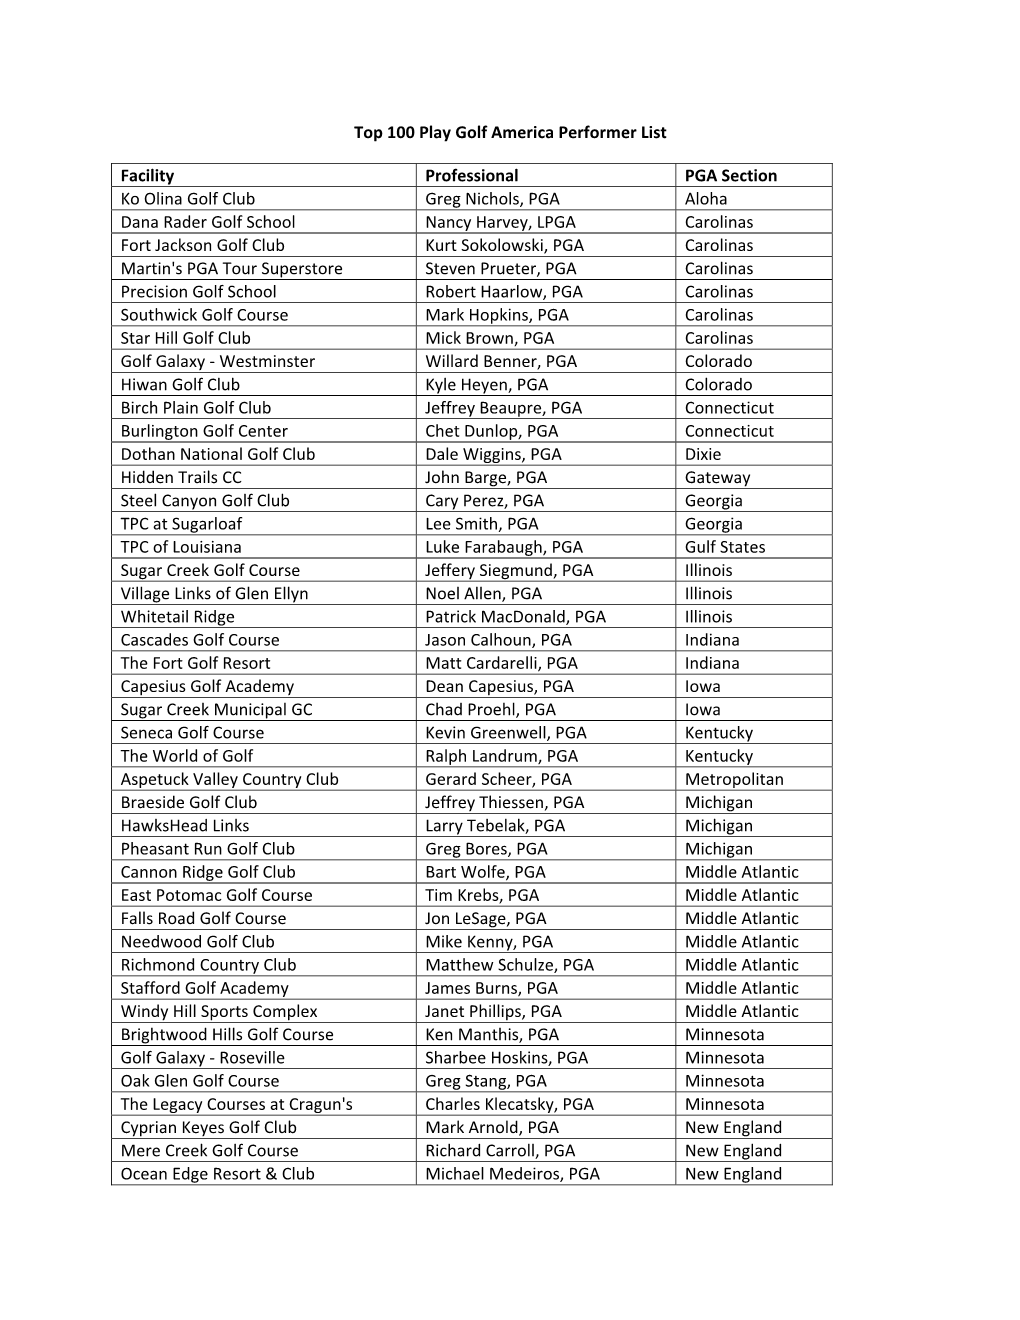 Top 100 Play Golf America Performer List Facility Professional PGA